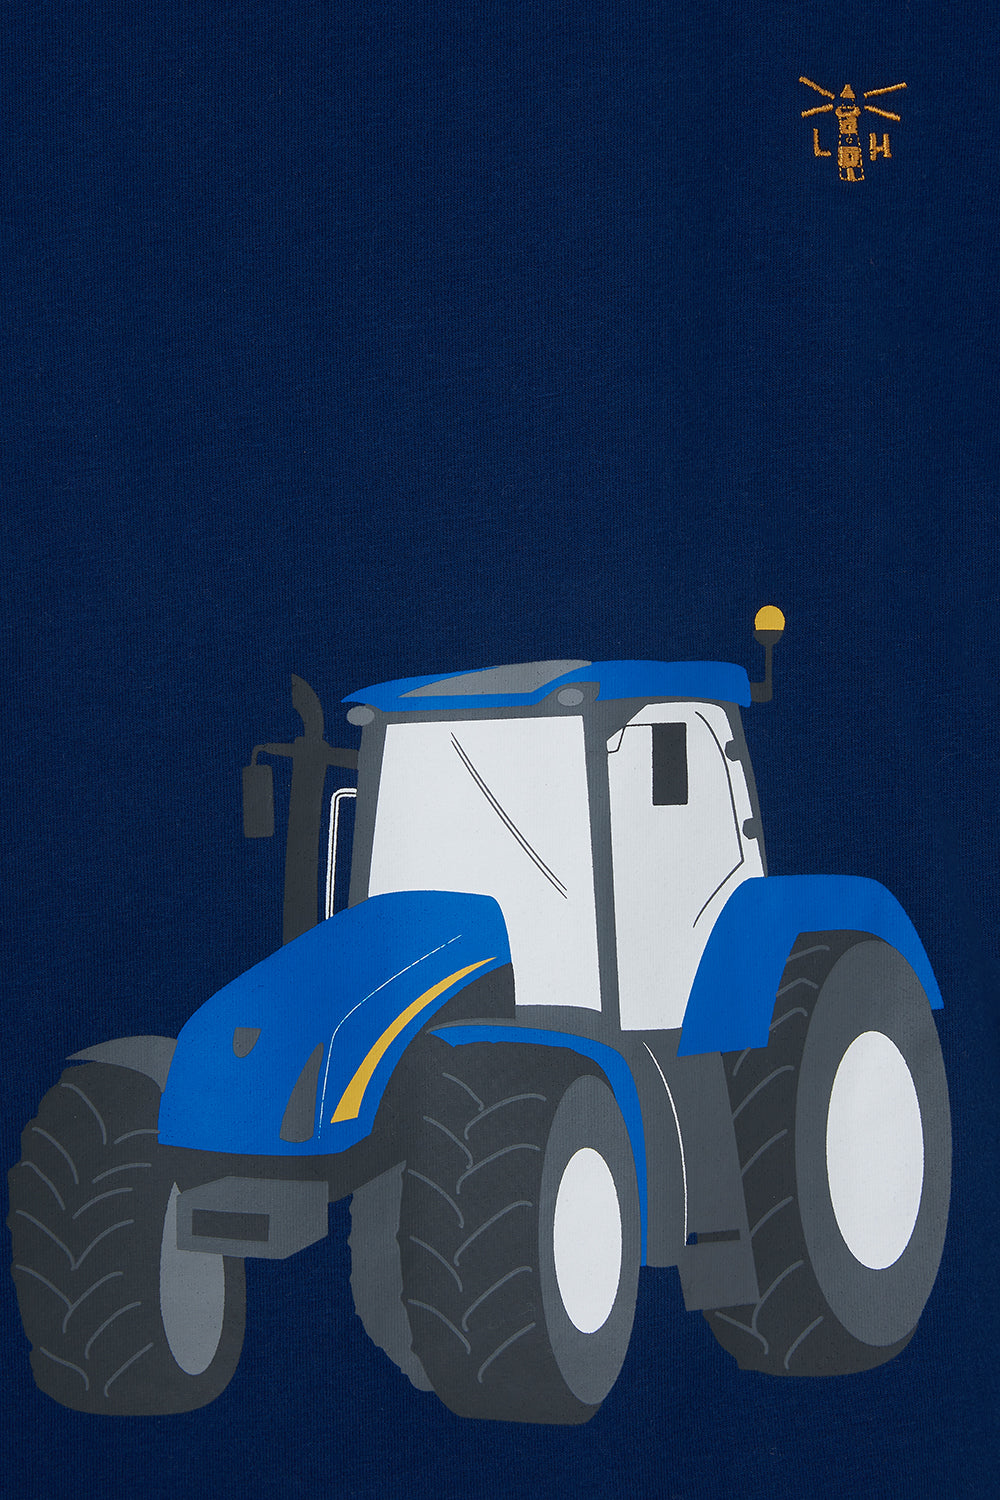 Lighthouse Mason T-shirt - Blue Tractor